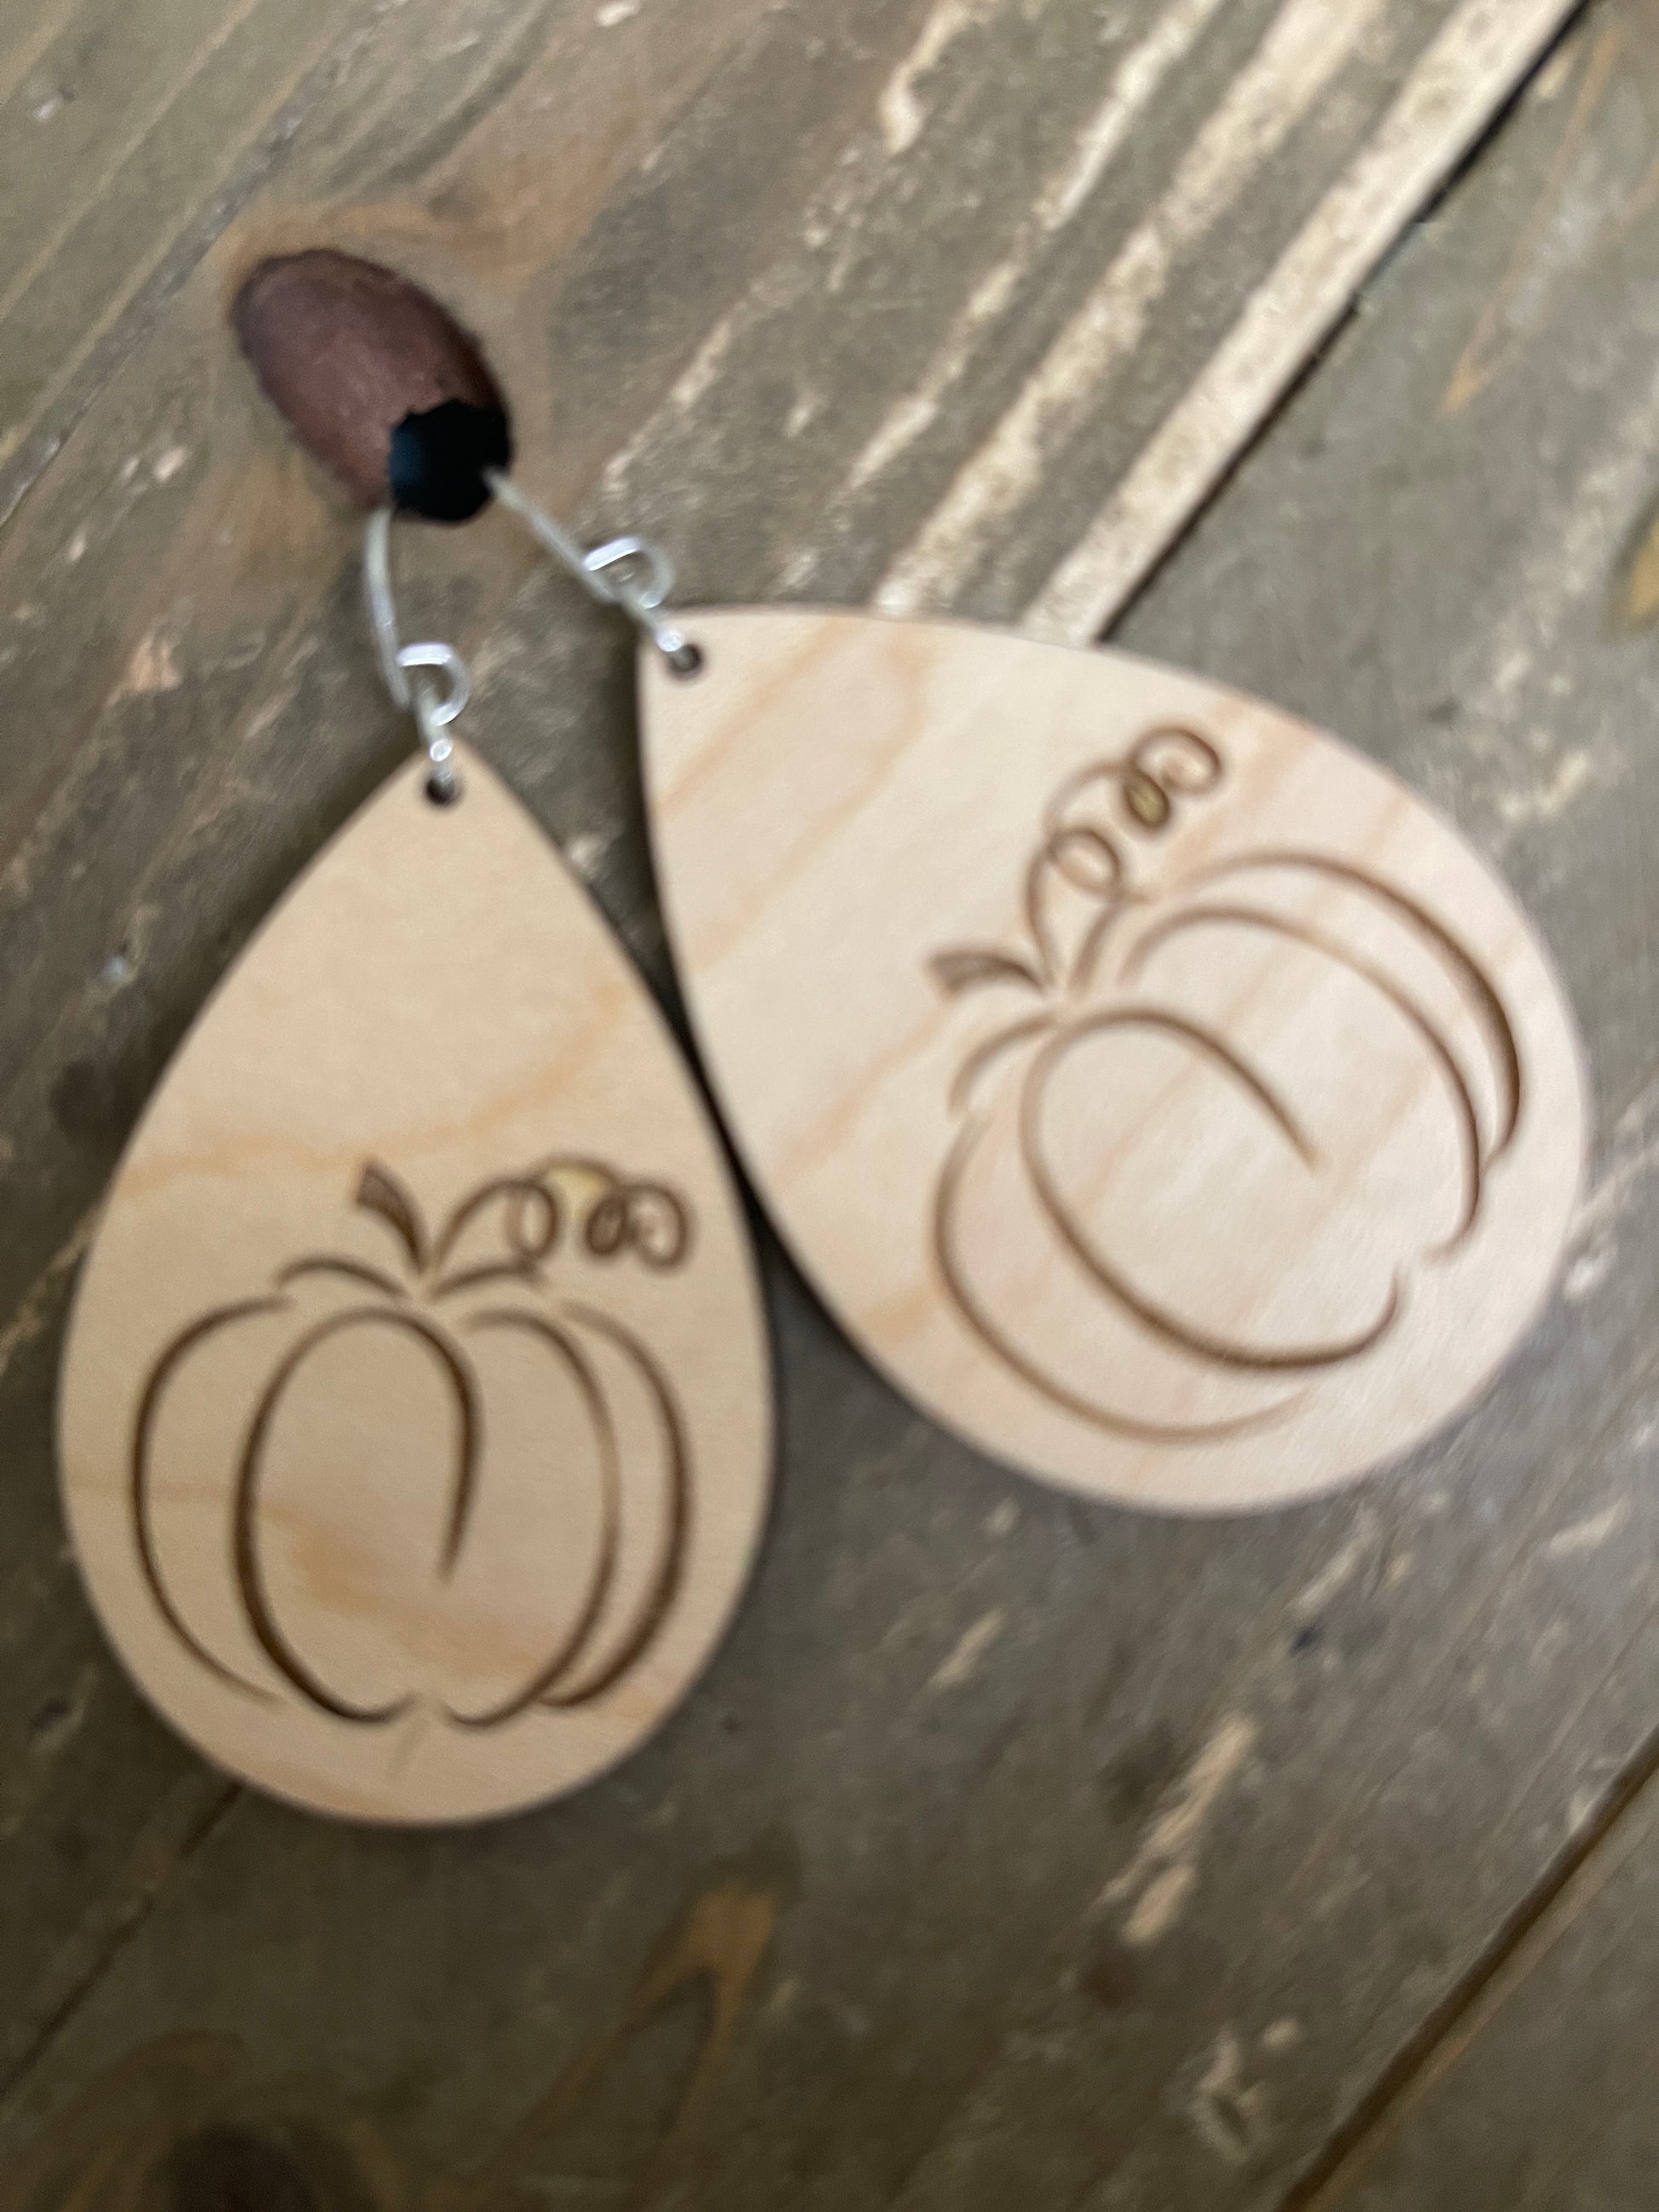 Maple Wood Pumpkin Wire EarringsPink tiful of LOVE